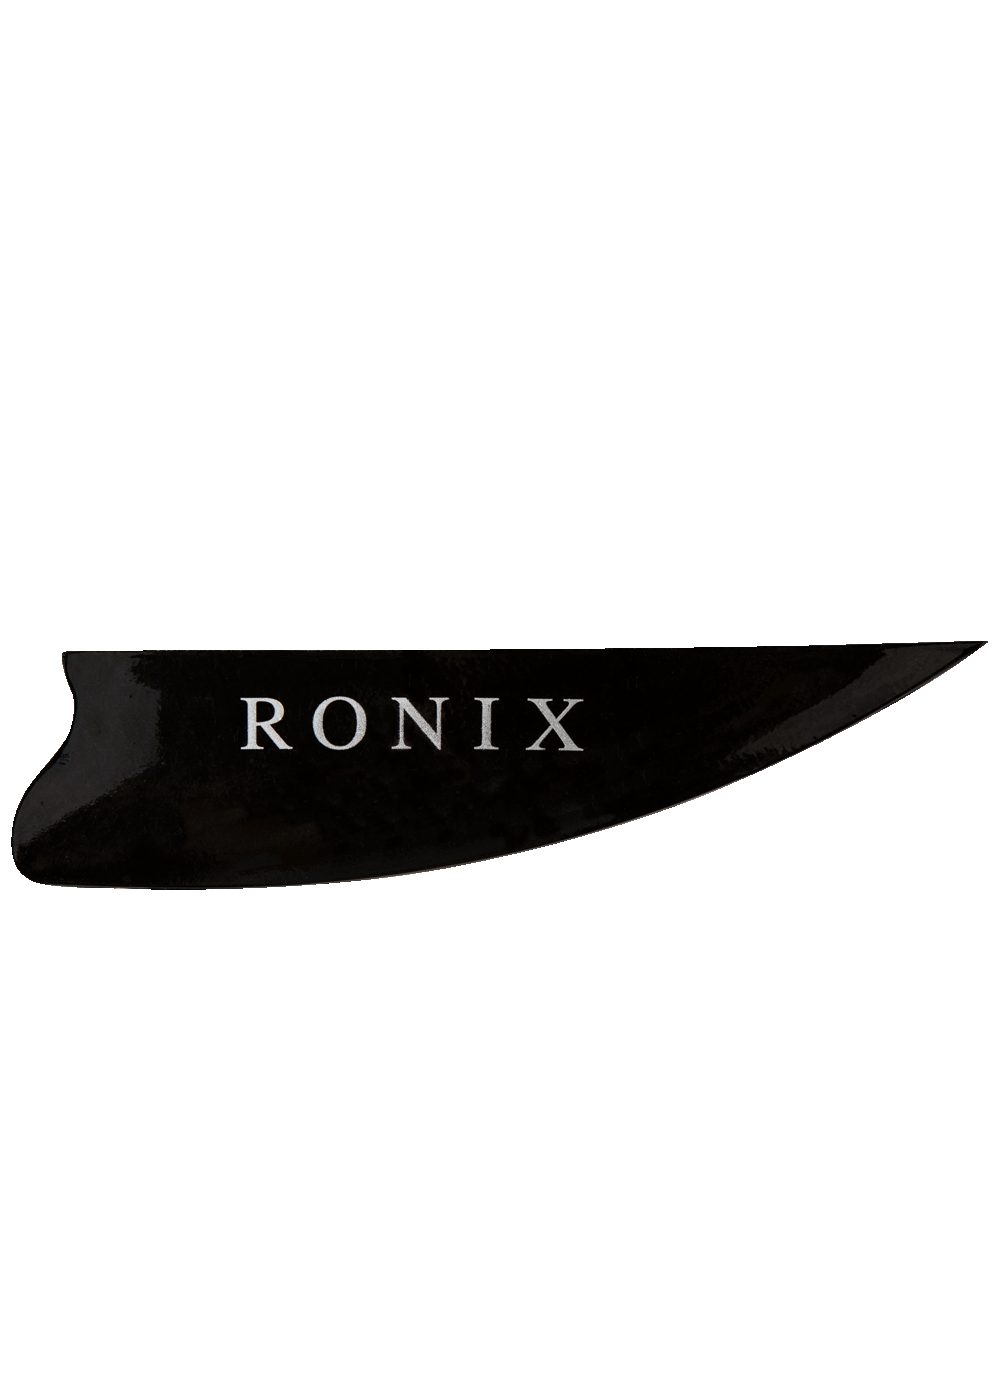 Ronix 2 Pack Fiberglass Wakeboard Ramp Fins .8"  Black 2020 